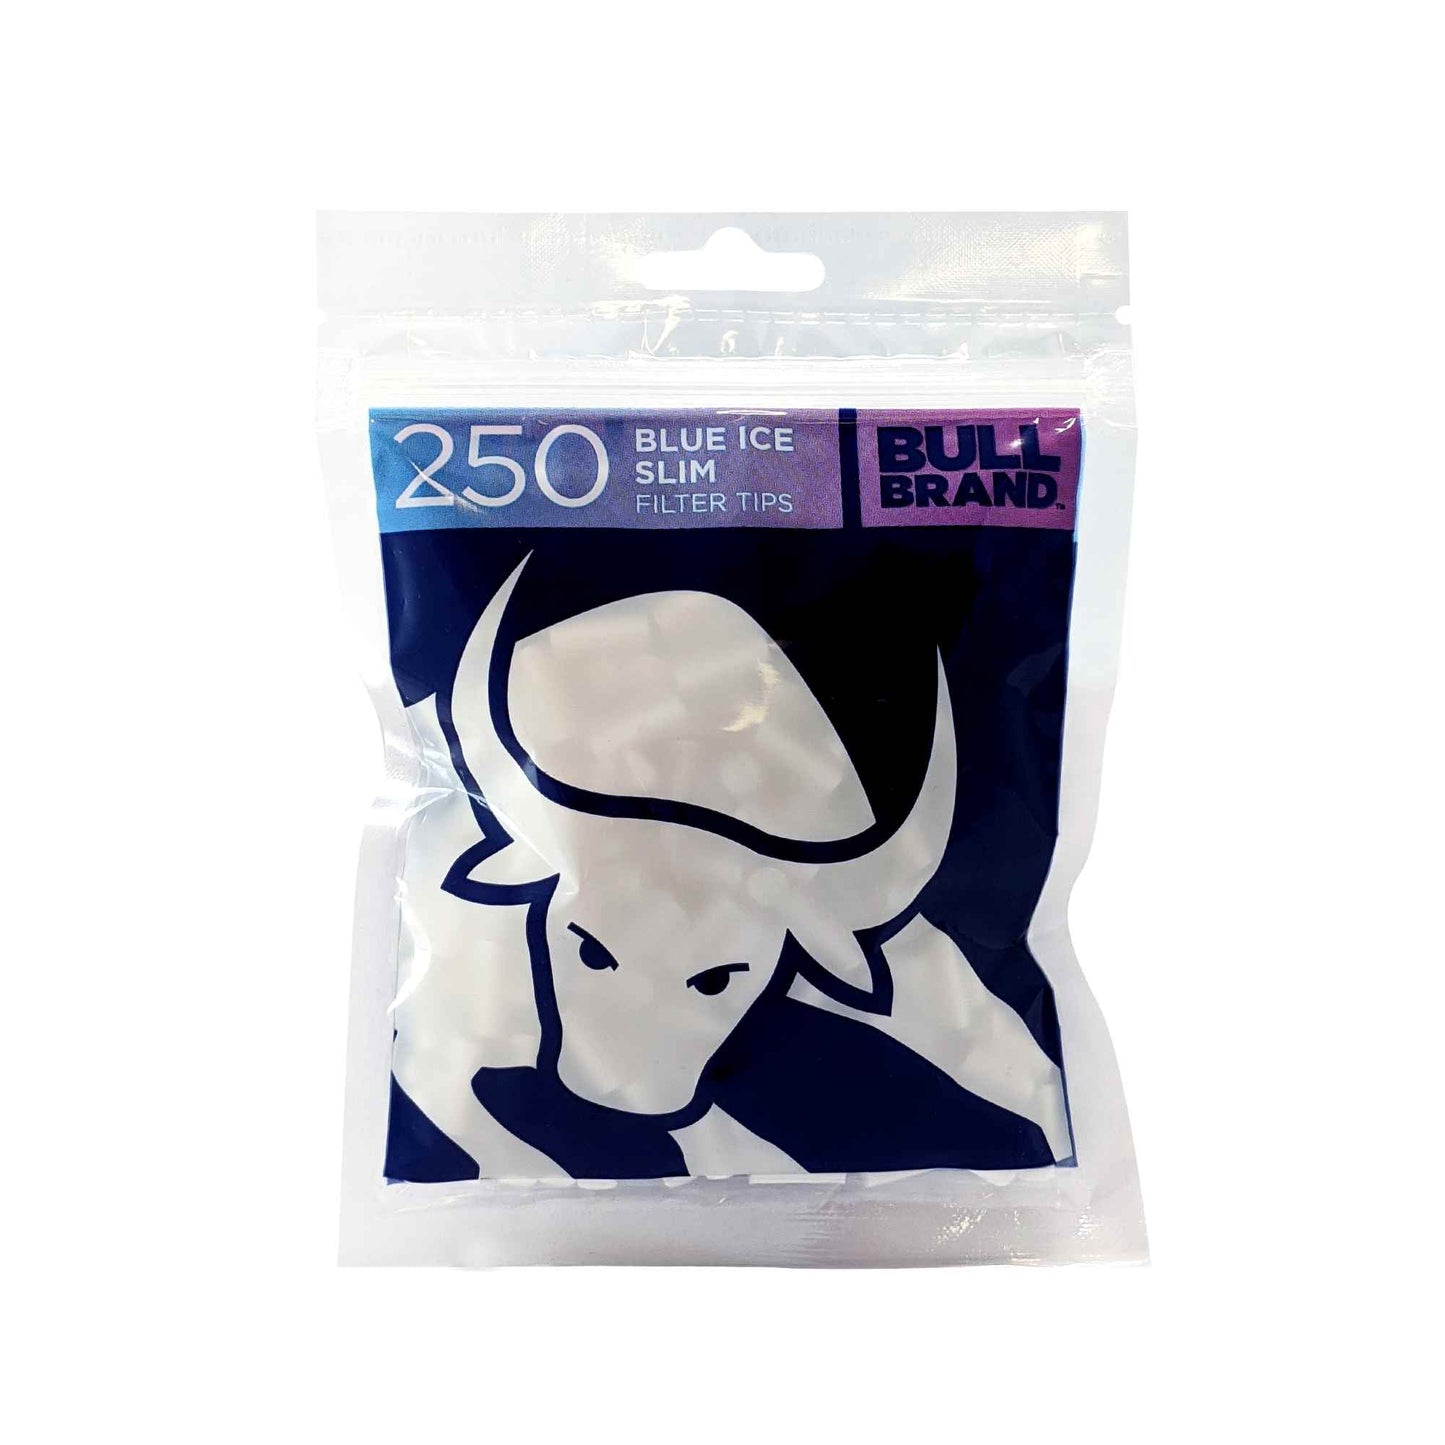 Bull Brand Blue Ice (Berry & Menthol) Slim Filter Tips Bags 250's